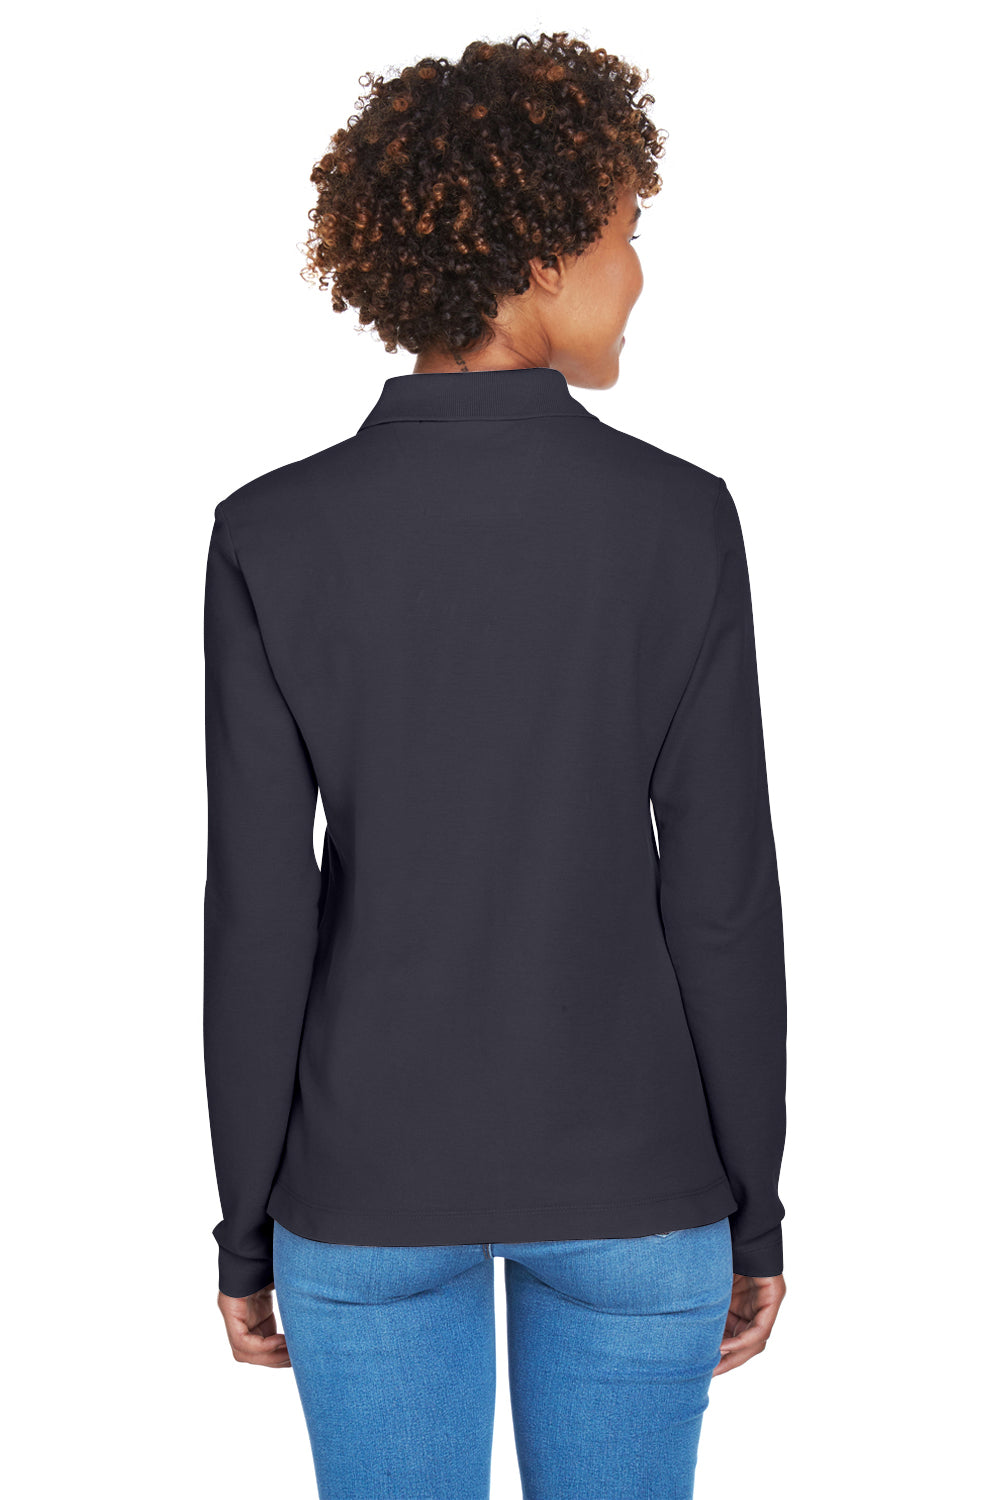 Devon & Jones D110W Womens Long Sleeve Polo Shirt Navy Blue Back